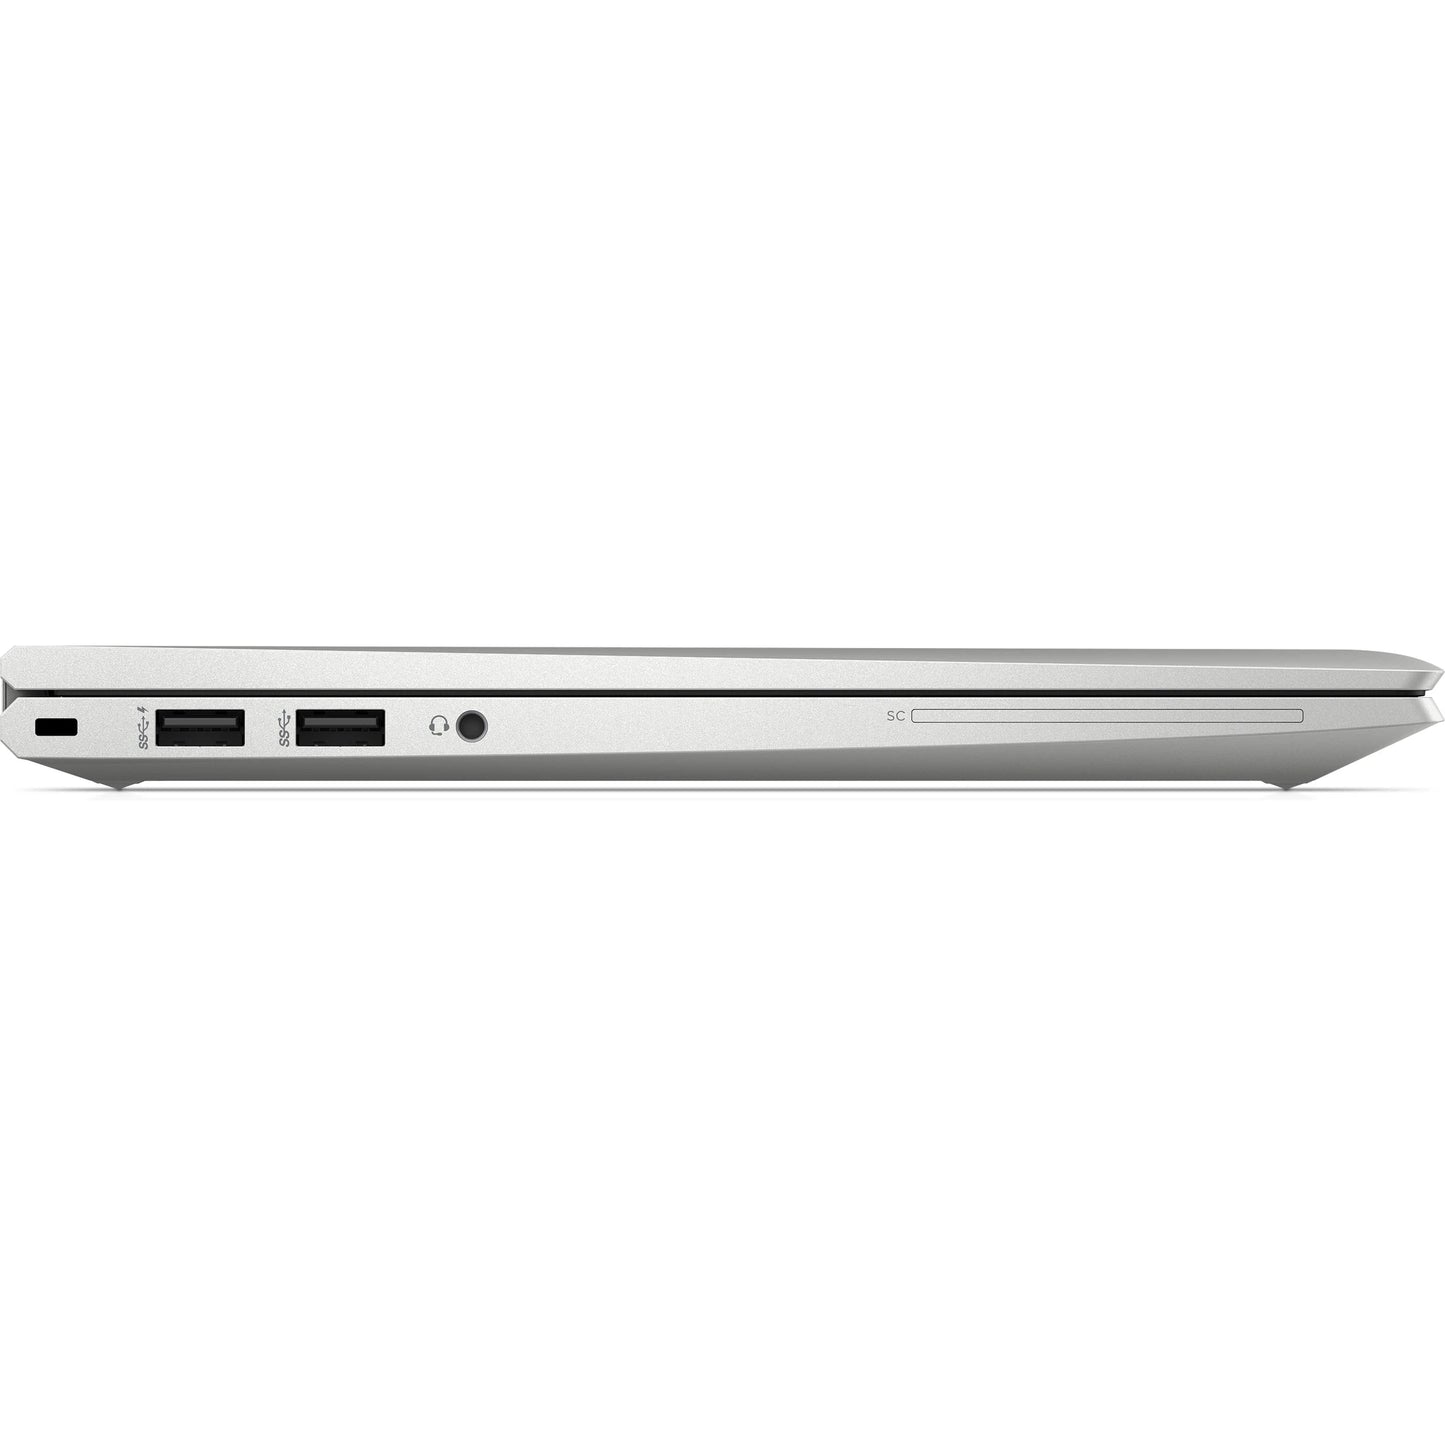 HP EliteBook x360 830 G8 Notebook PC